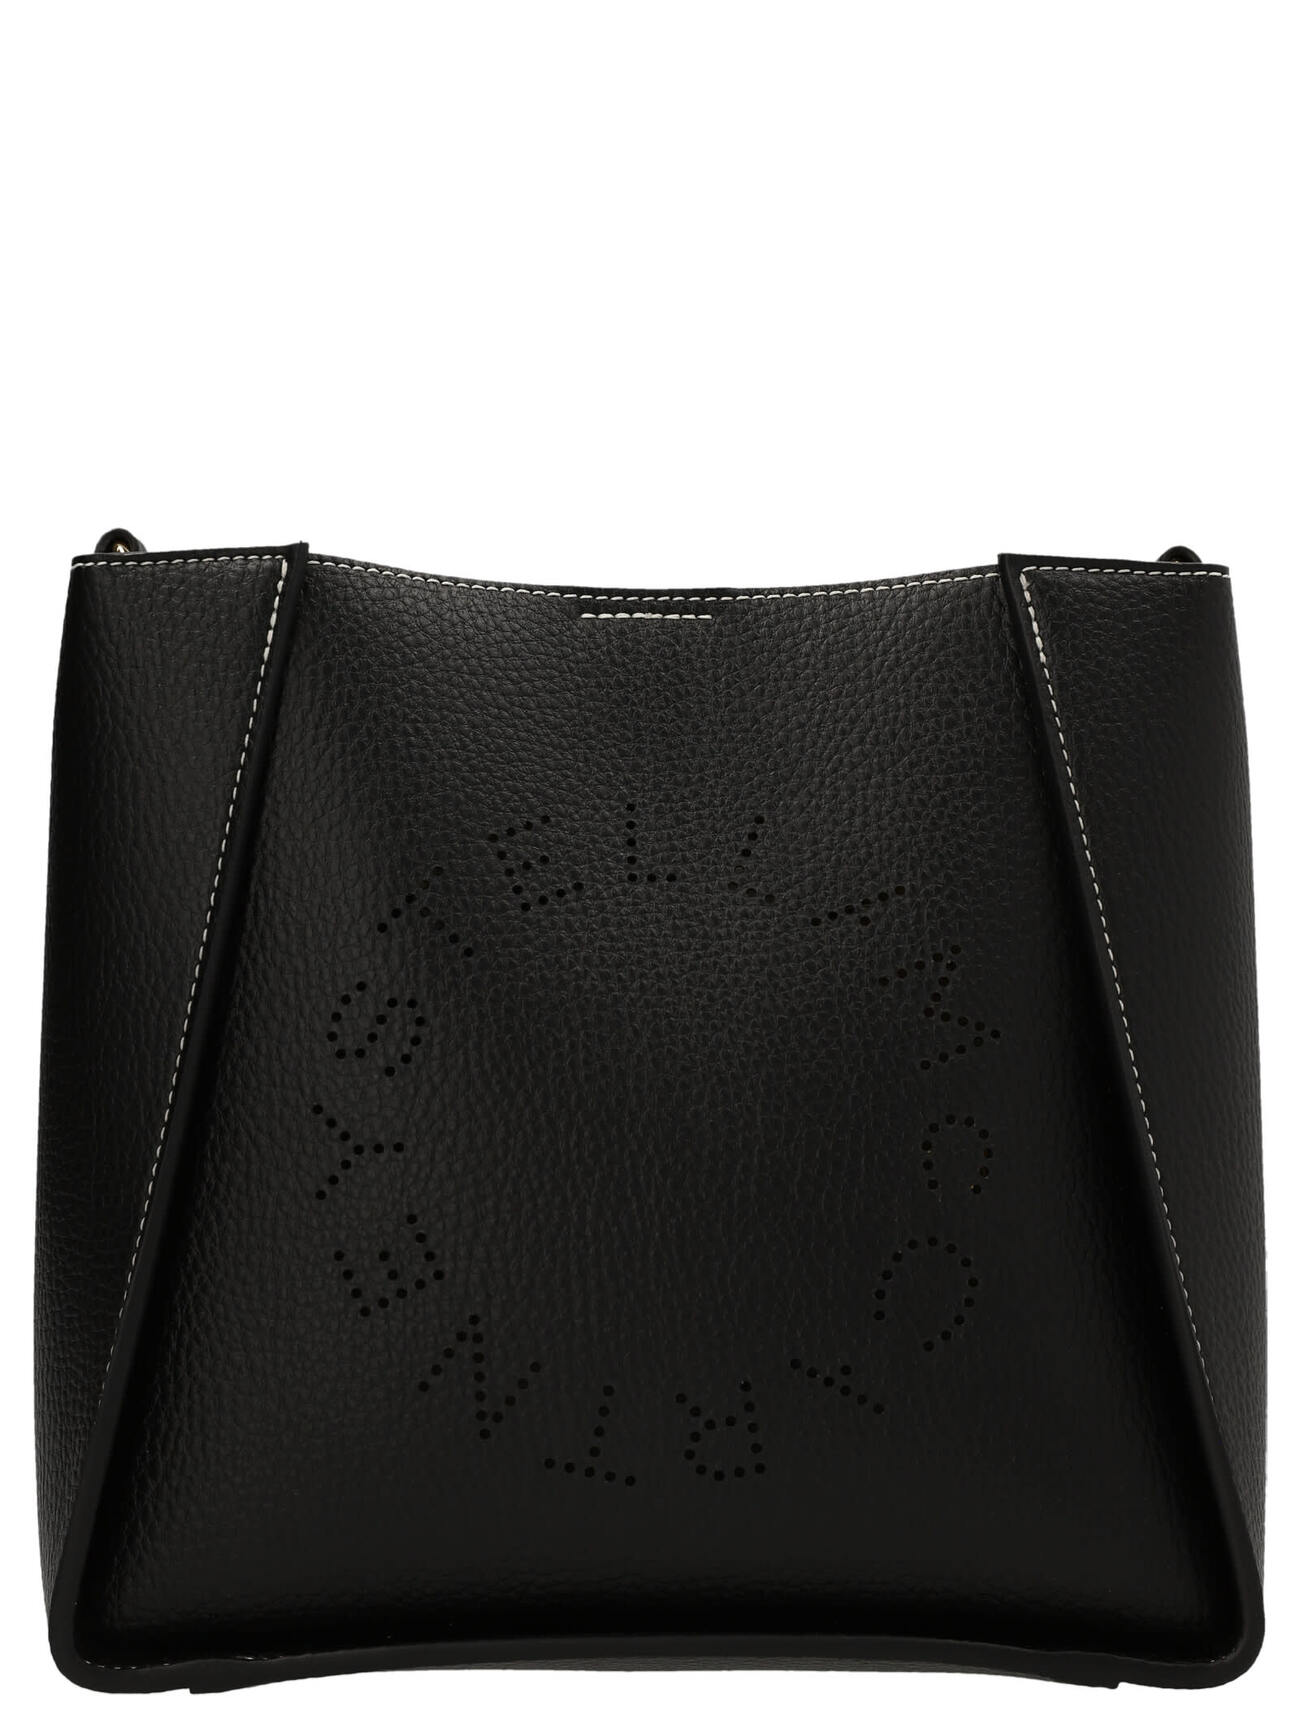 Stella McCartney grainy Mat Crossbody Bag in black